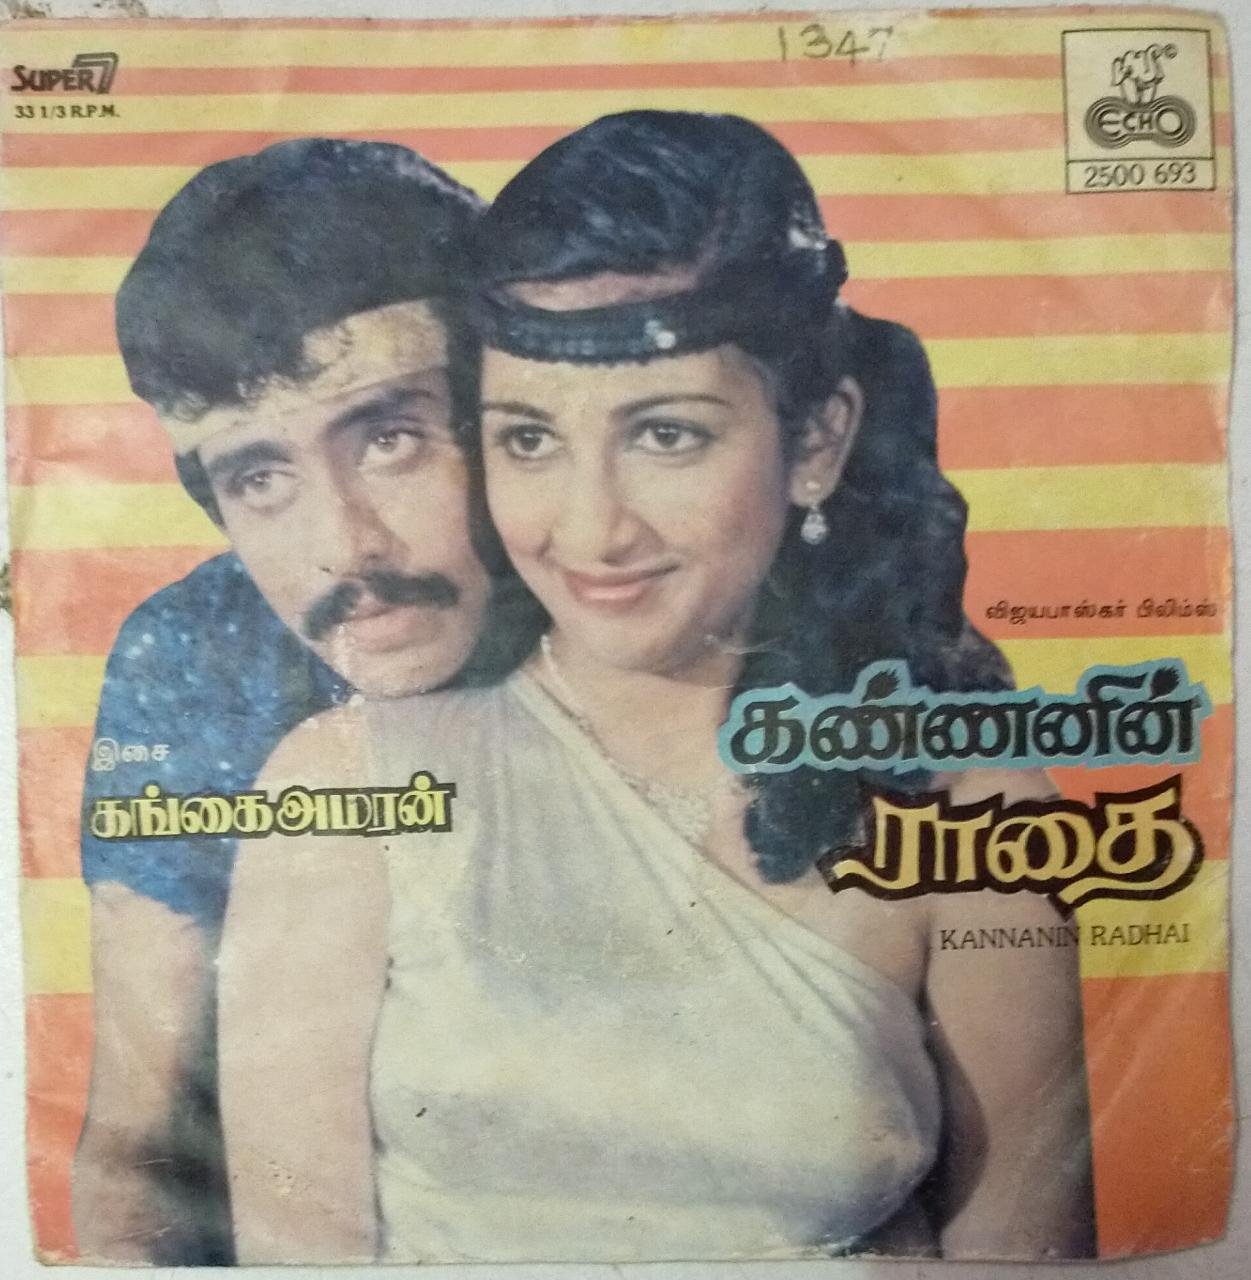 Kannanin Radhai Tamil Film Super 7 EP vinyl record by Gangai ...